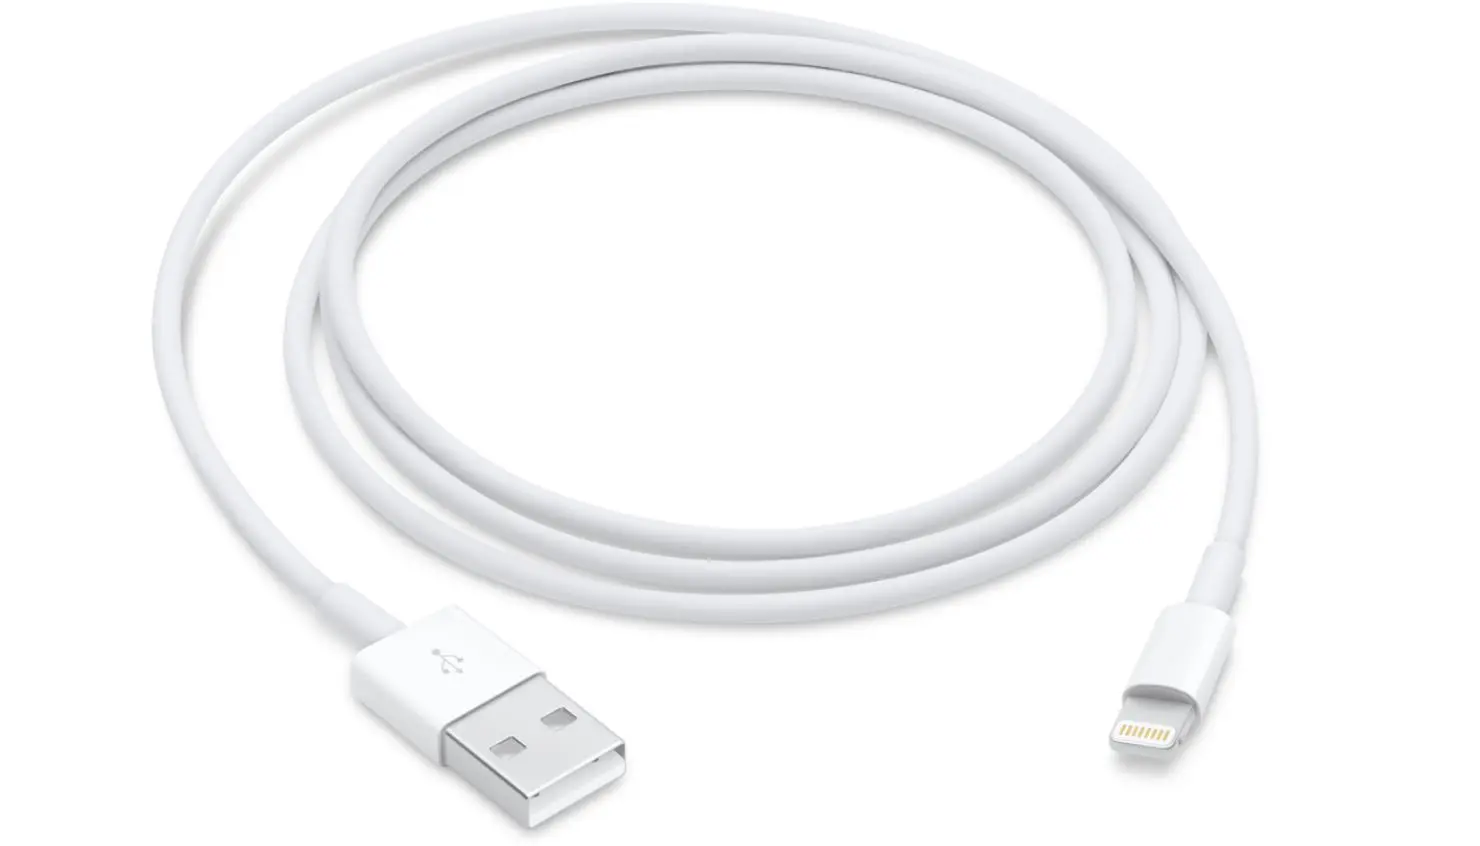 Cablu date Apple MXLY2ZM/A, Lightning-USB A, 1m, Alb